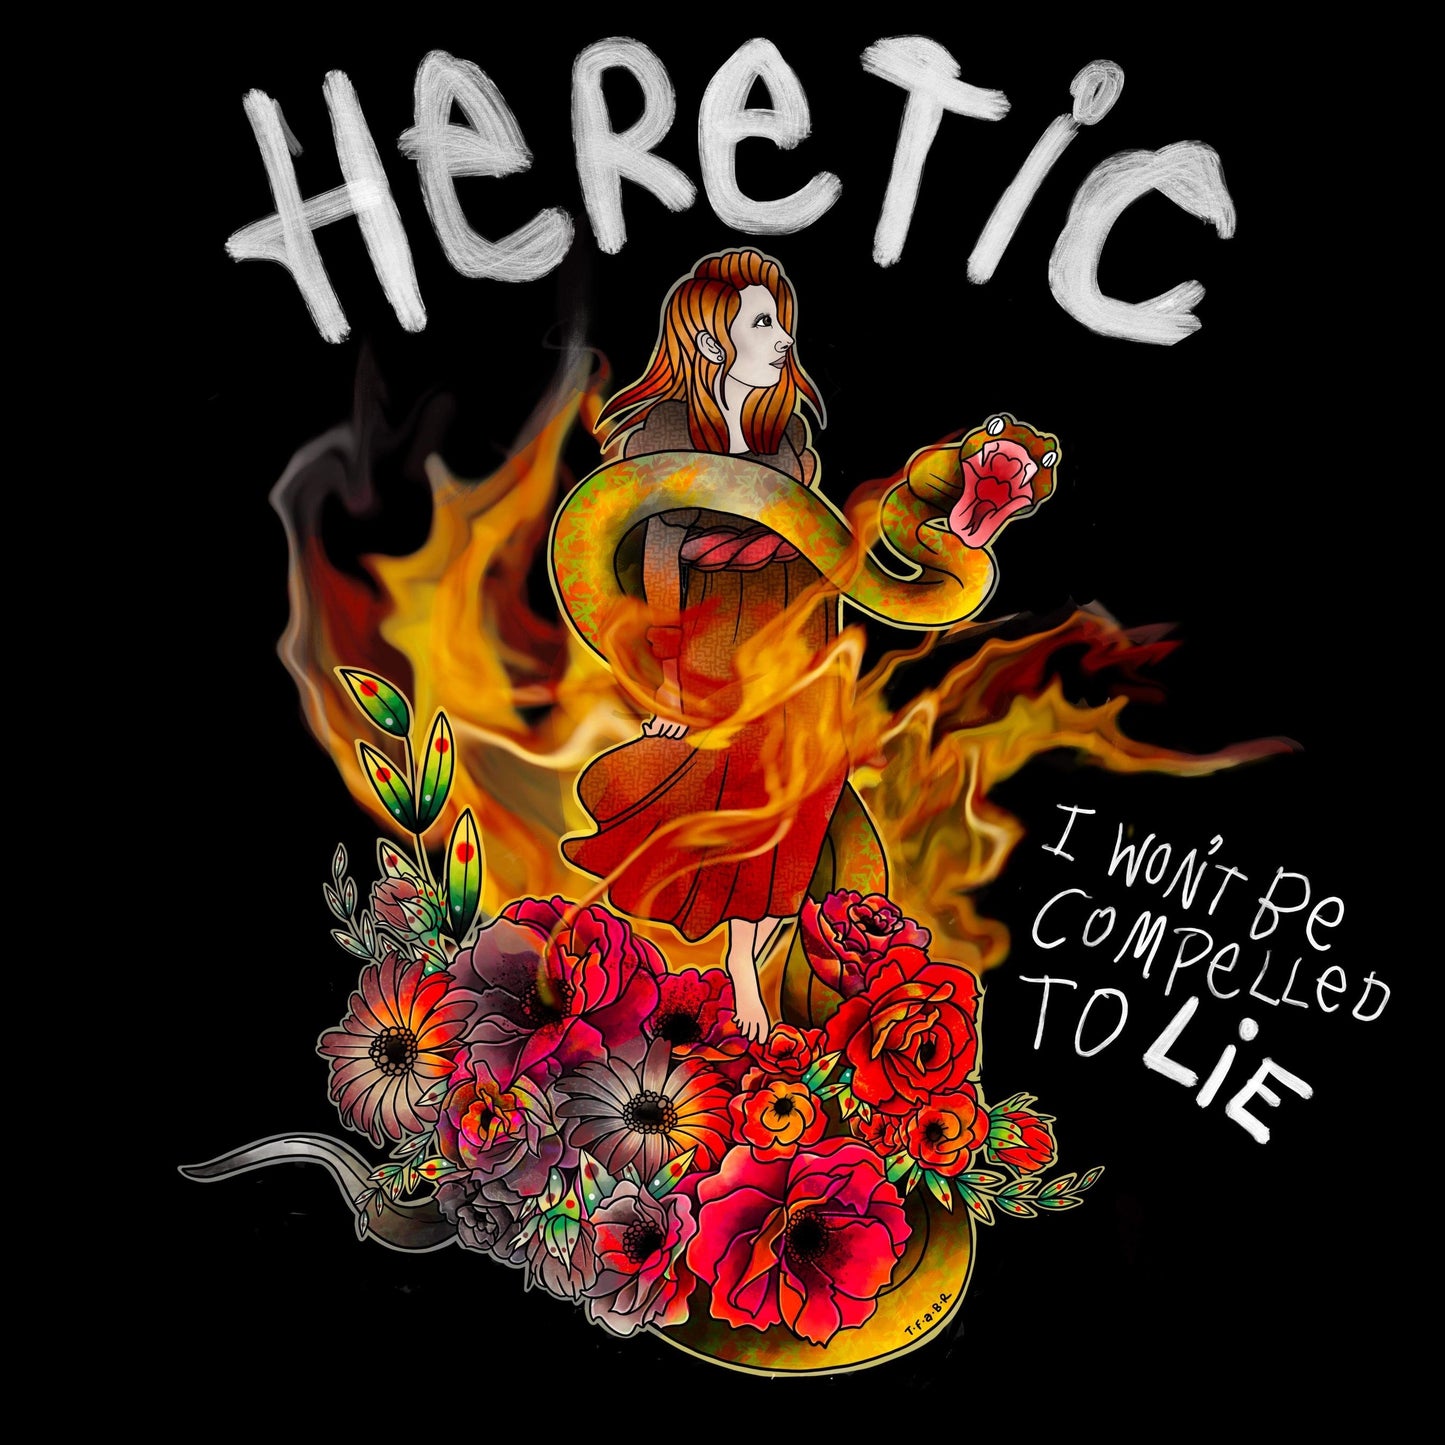 Heretic - Ladyfit T-Shirt